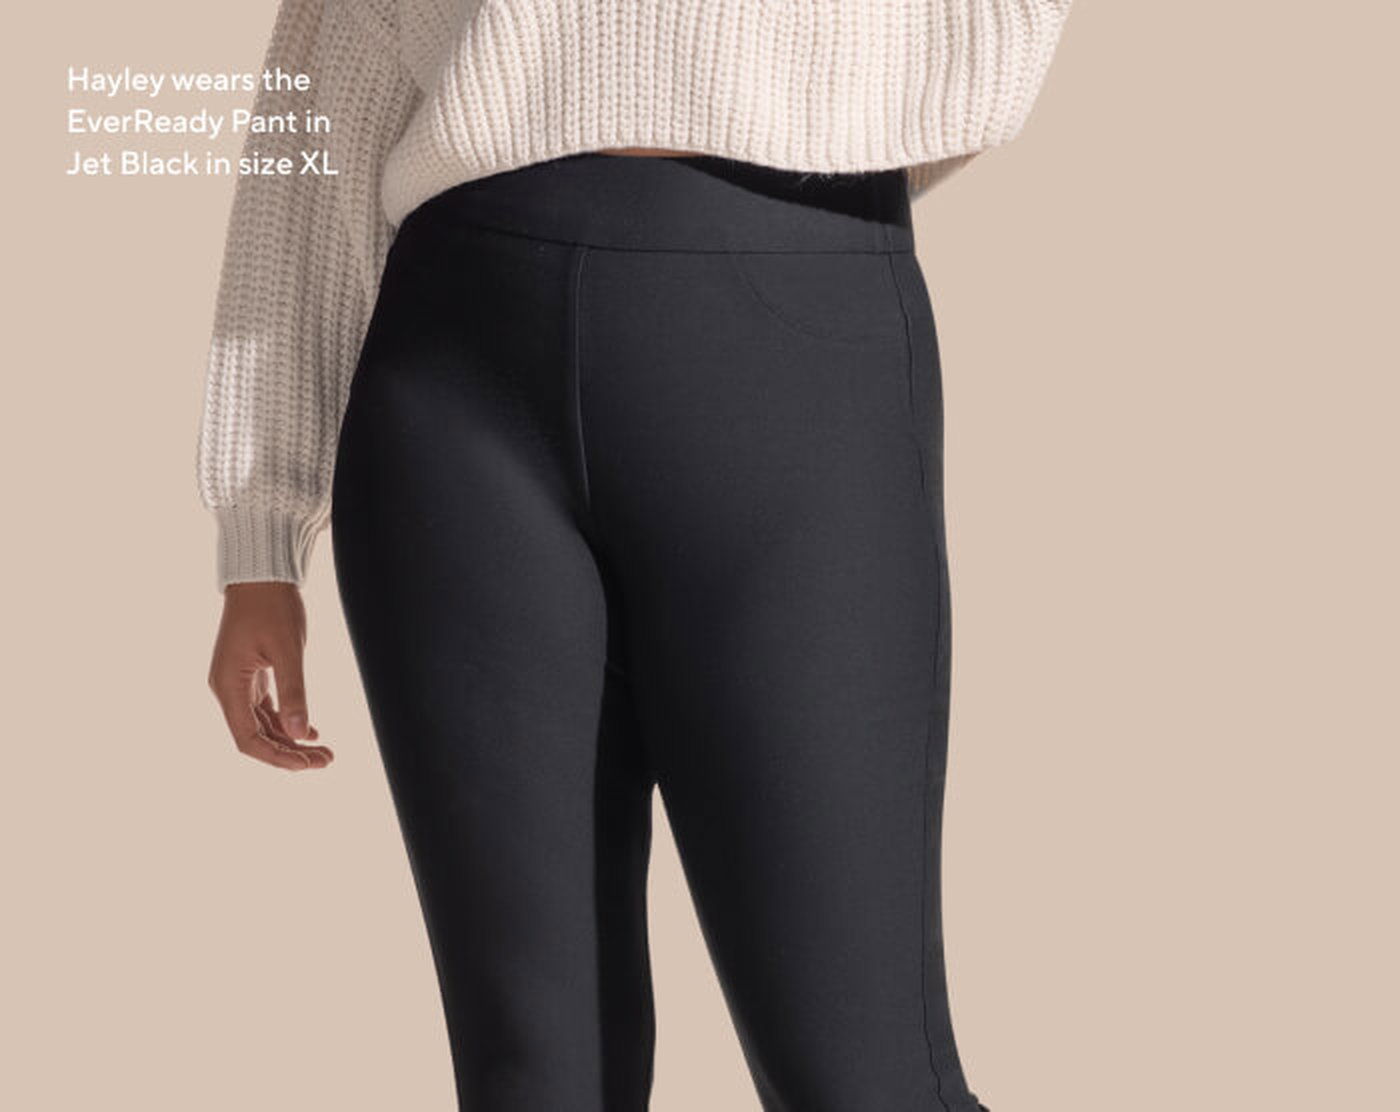 What is the inseam of Honeylove Pants & Leggings? – Honeylove